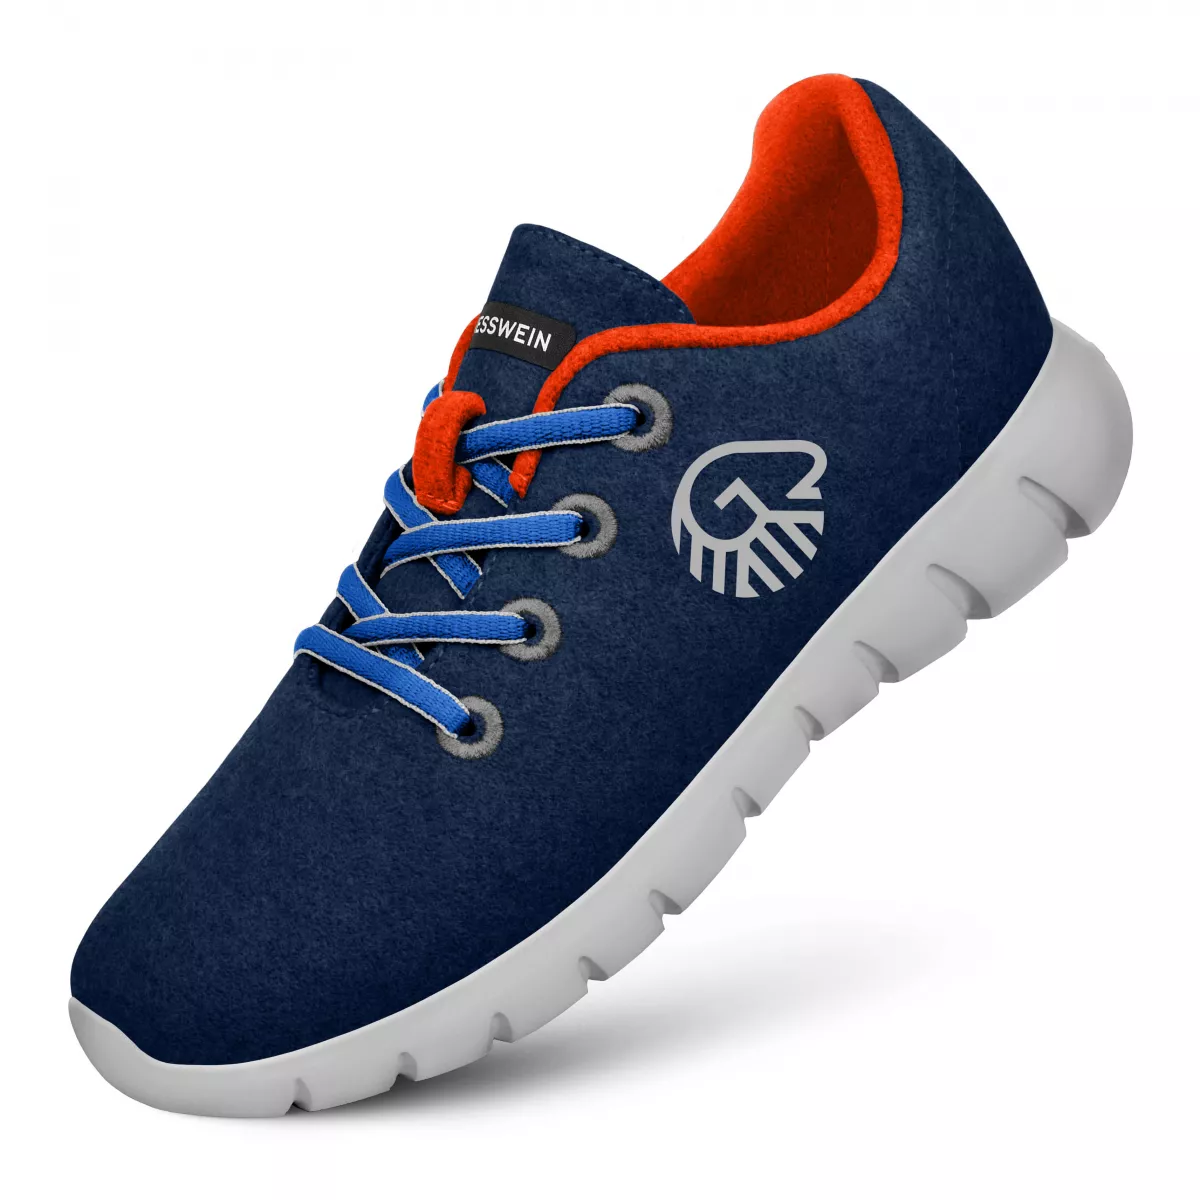 Pantofi dama Merino Runners bleumarin 640 41